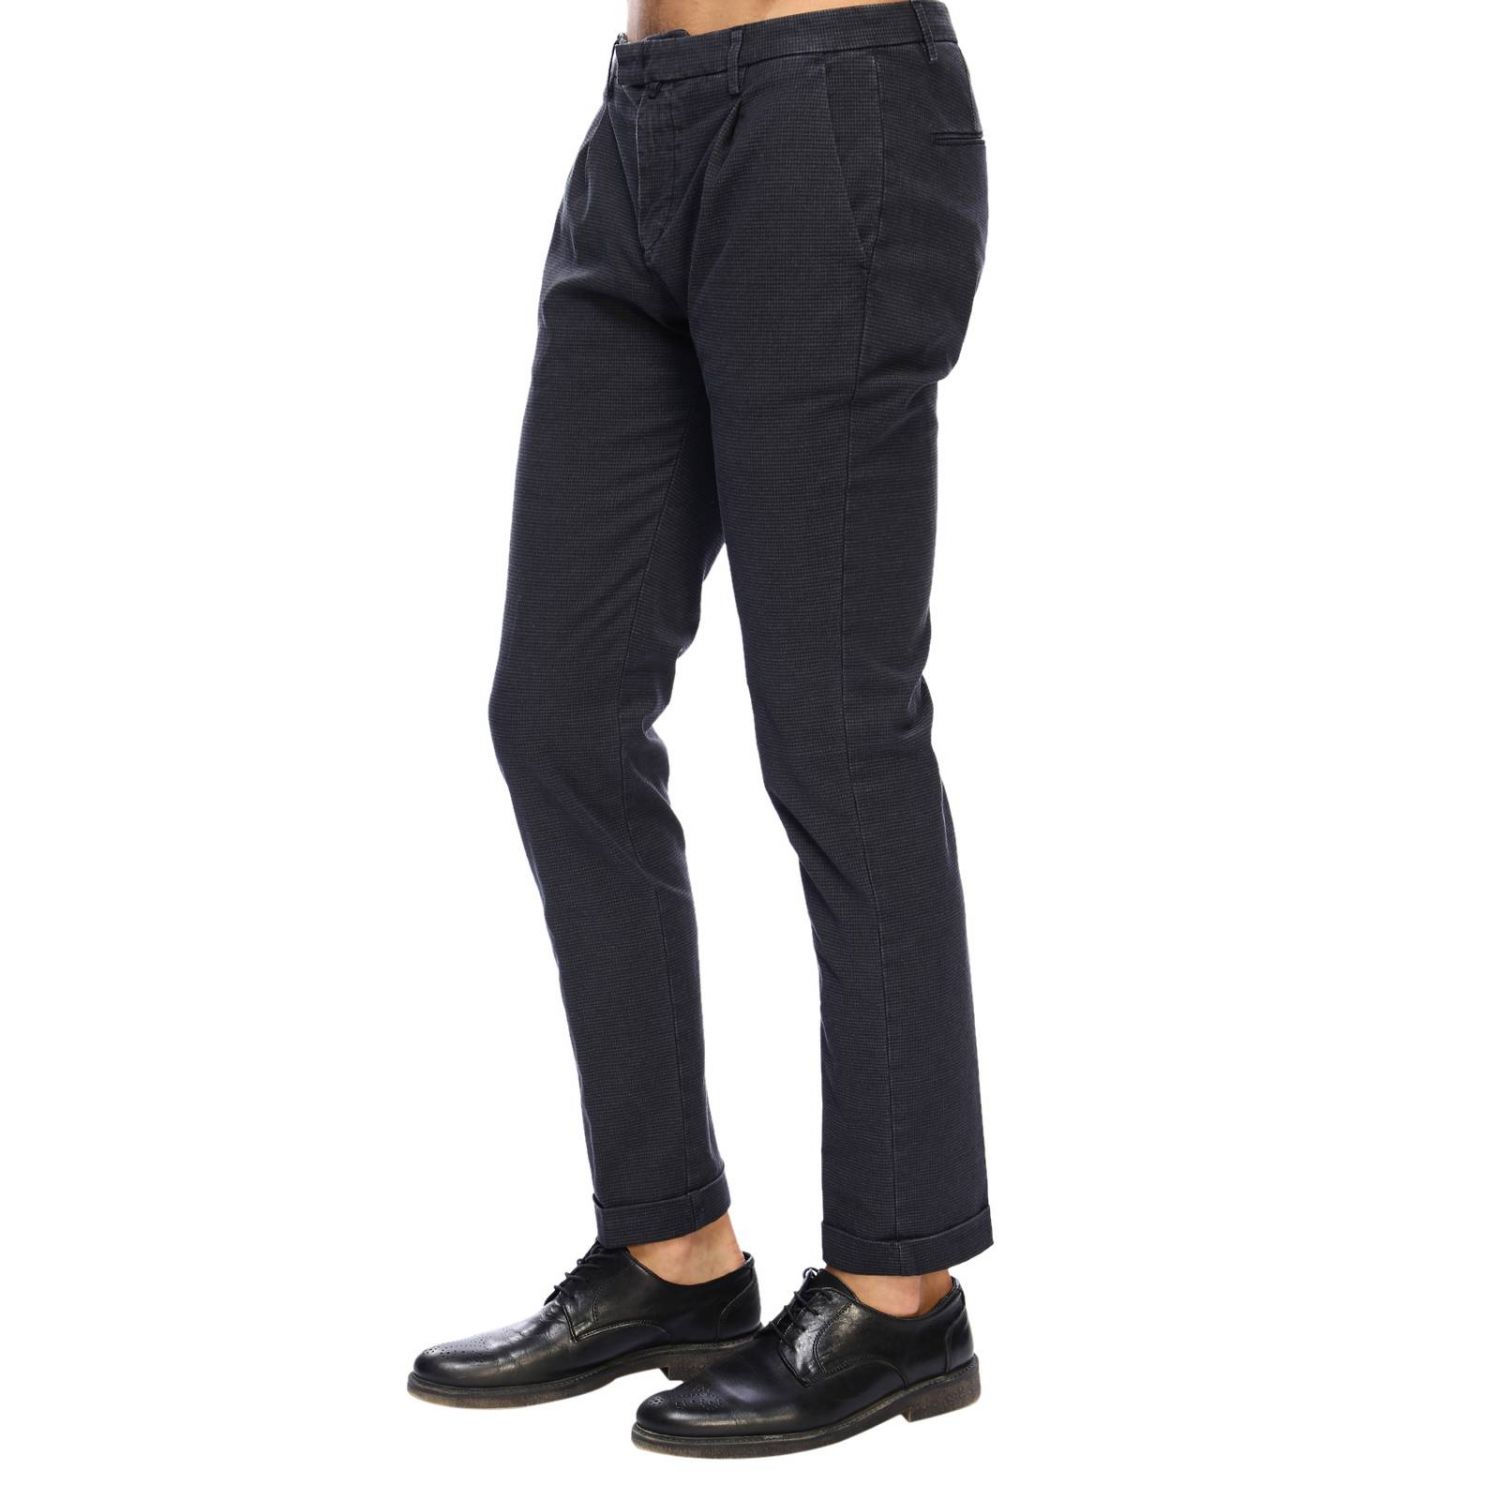 Briglia Outlet: pants for man - Blue | Briglia pants BG07 4852 online ...